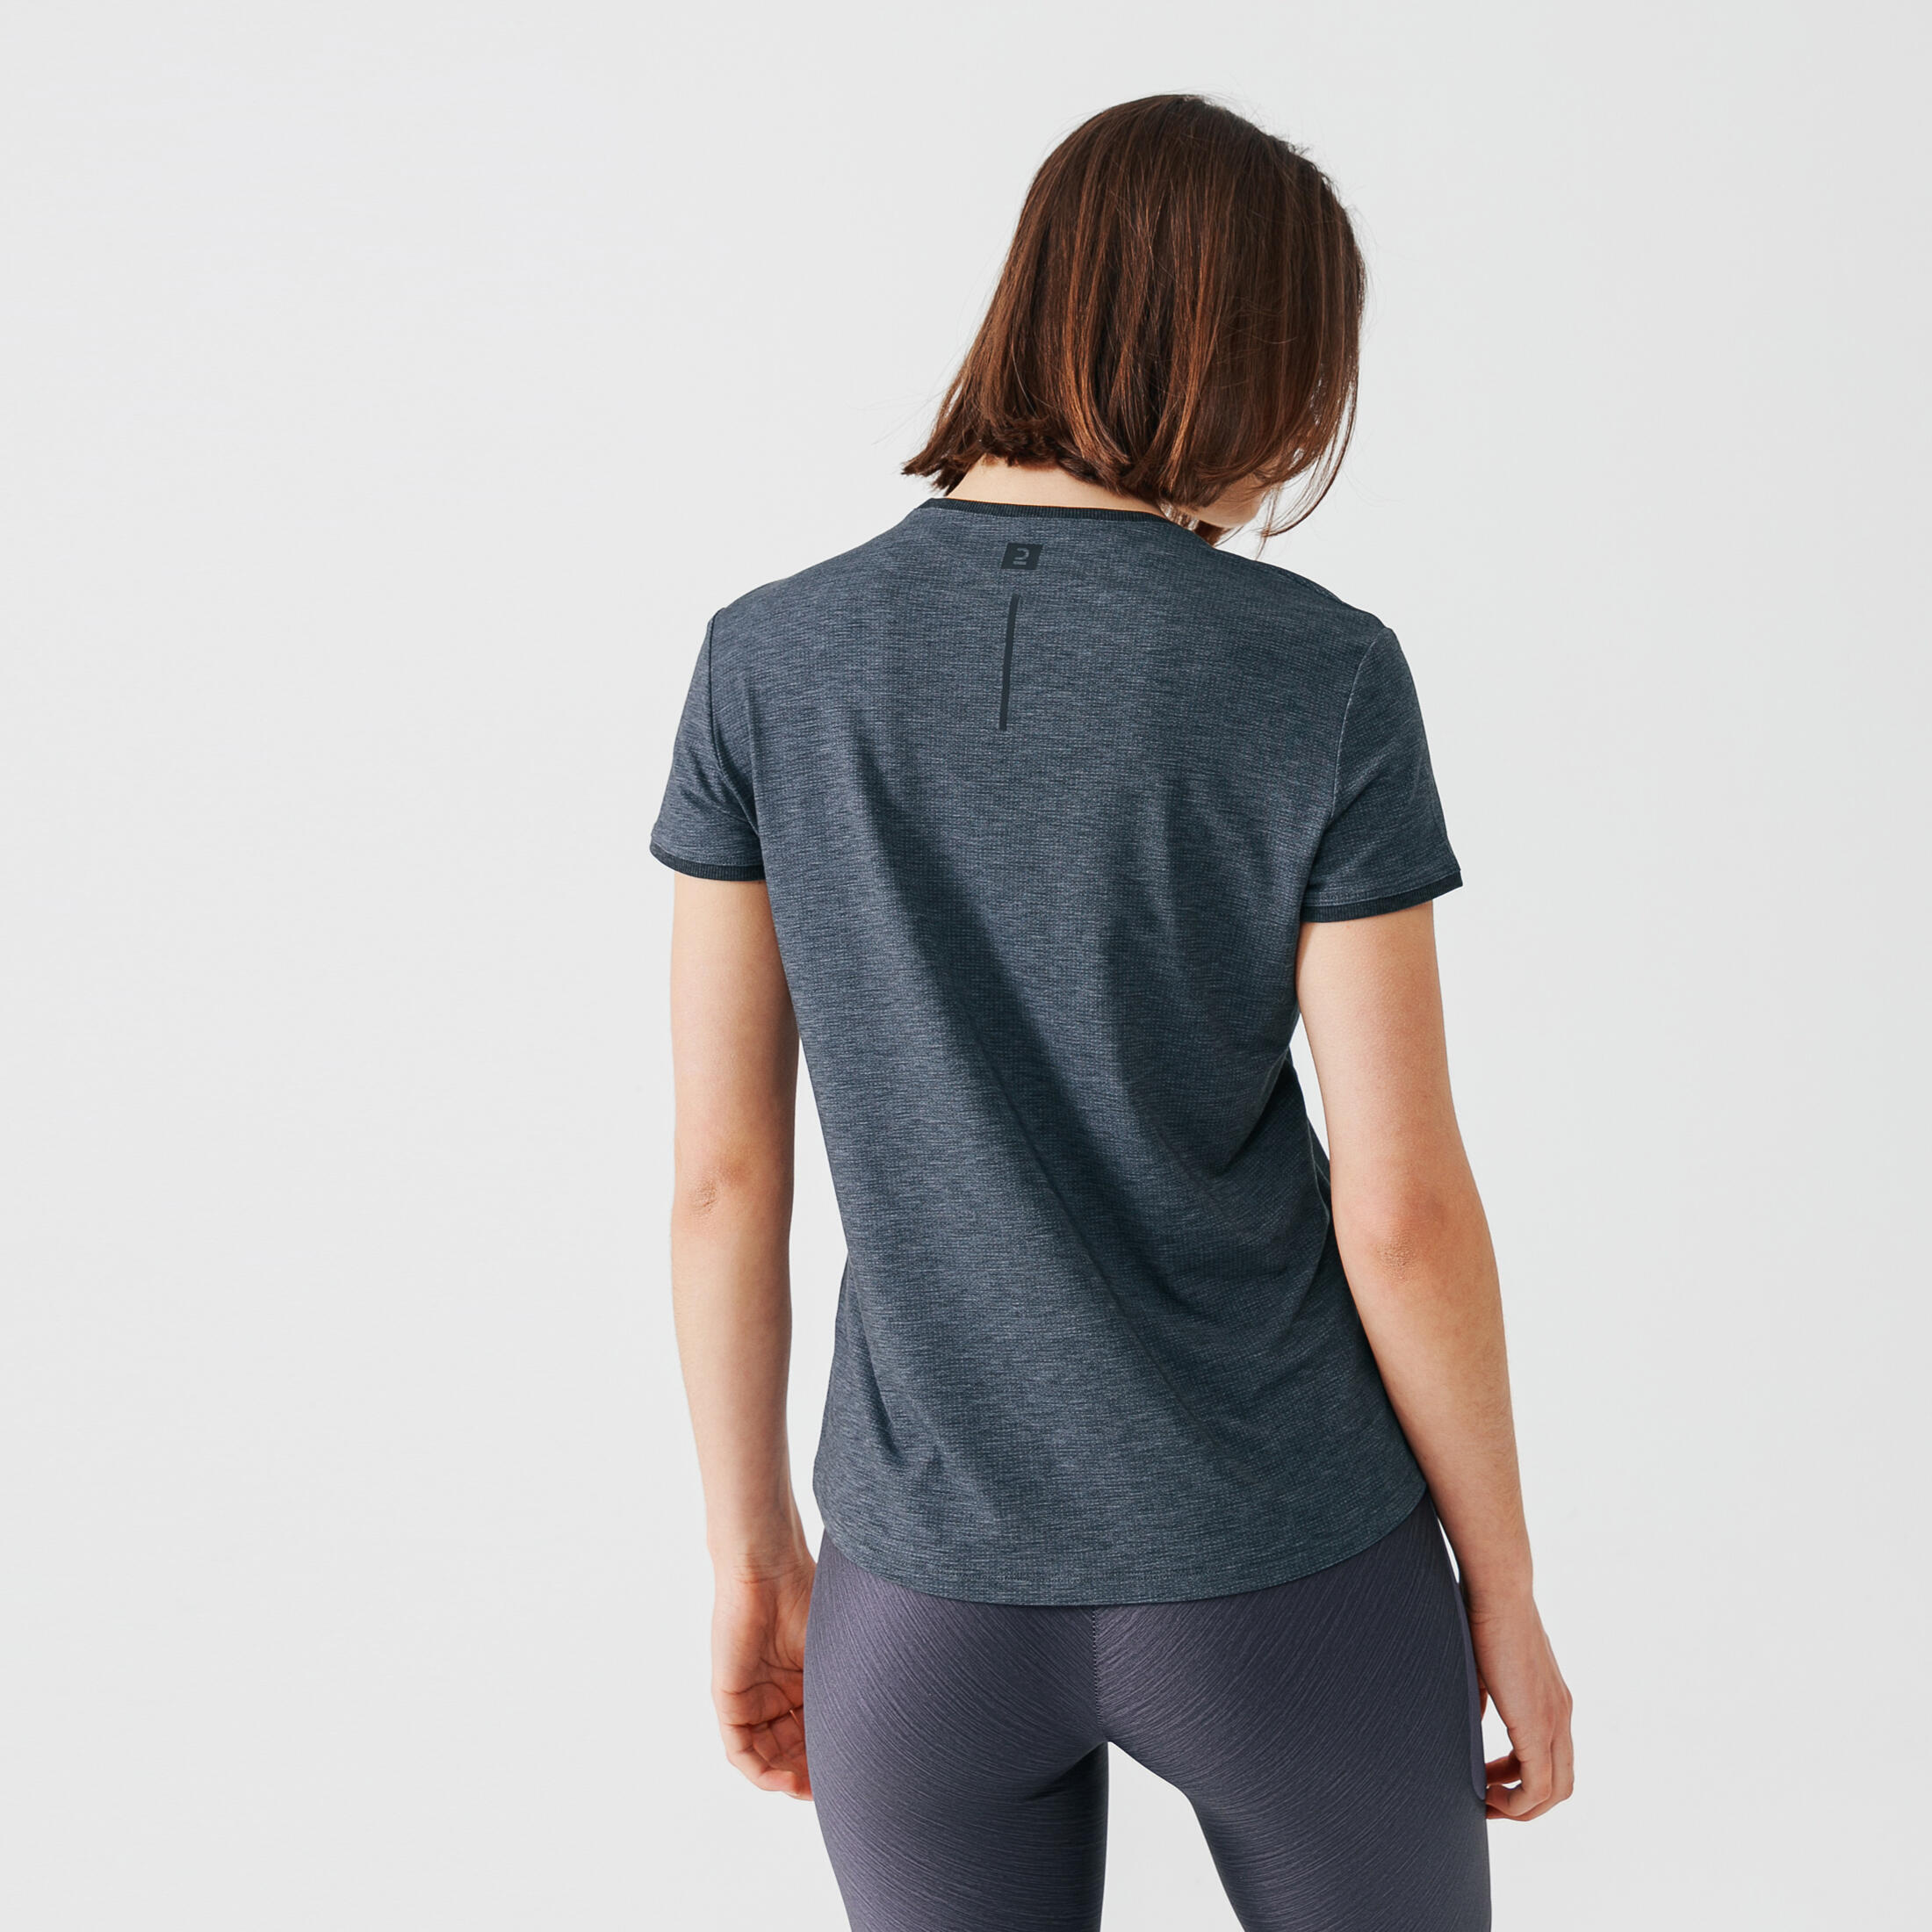 Soft and breathable women's running T-shirt - dark grey 4/10